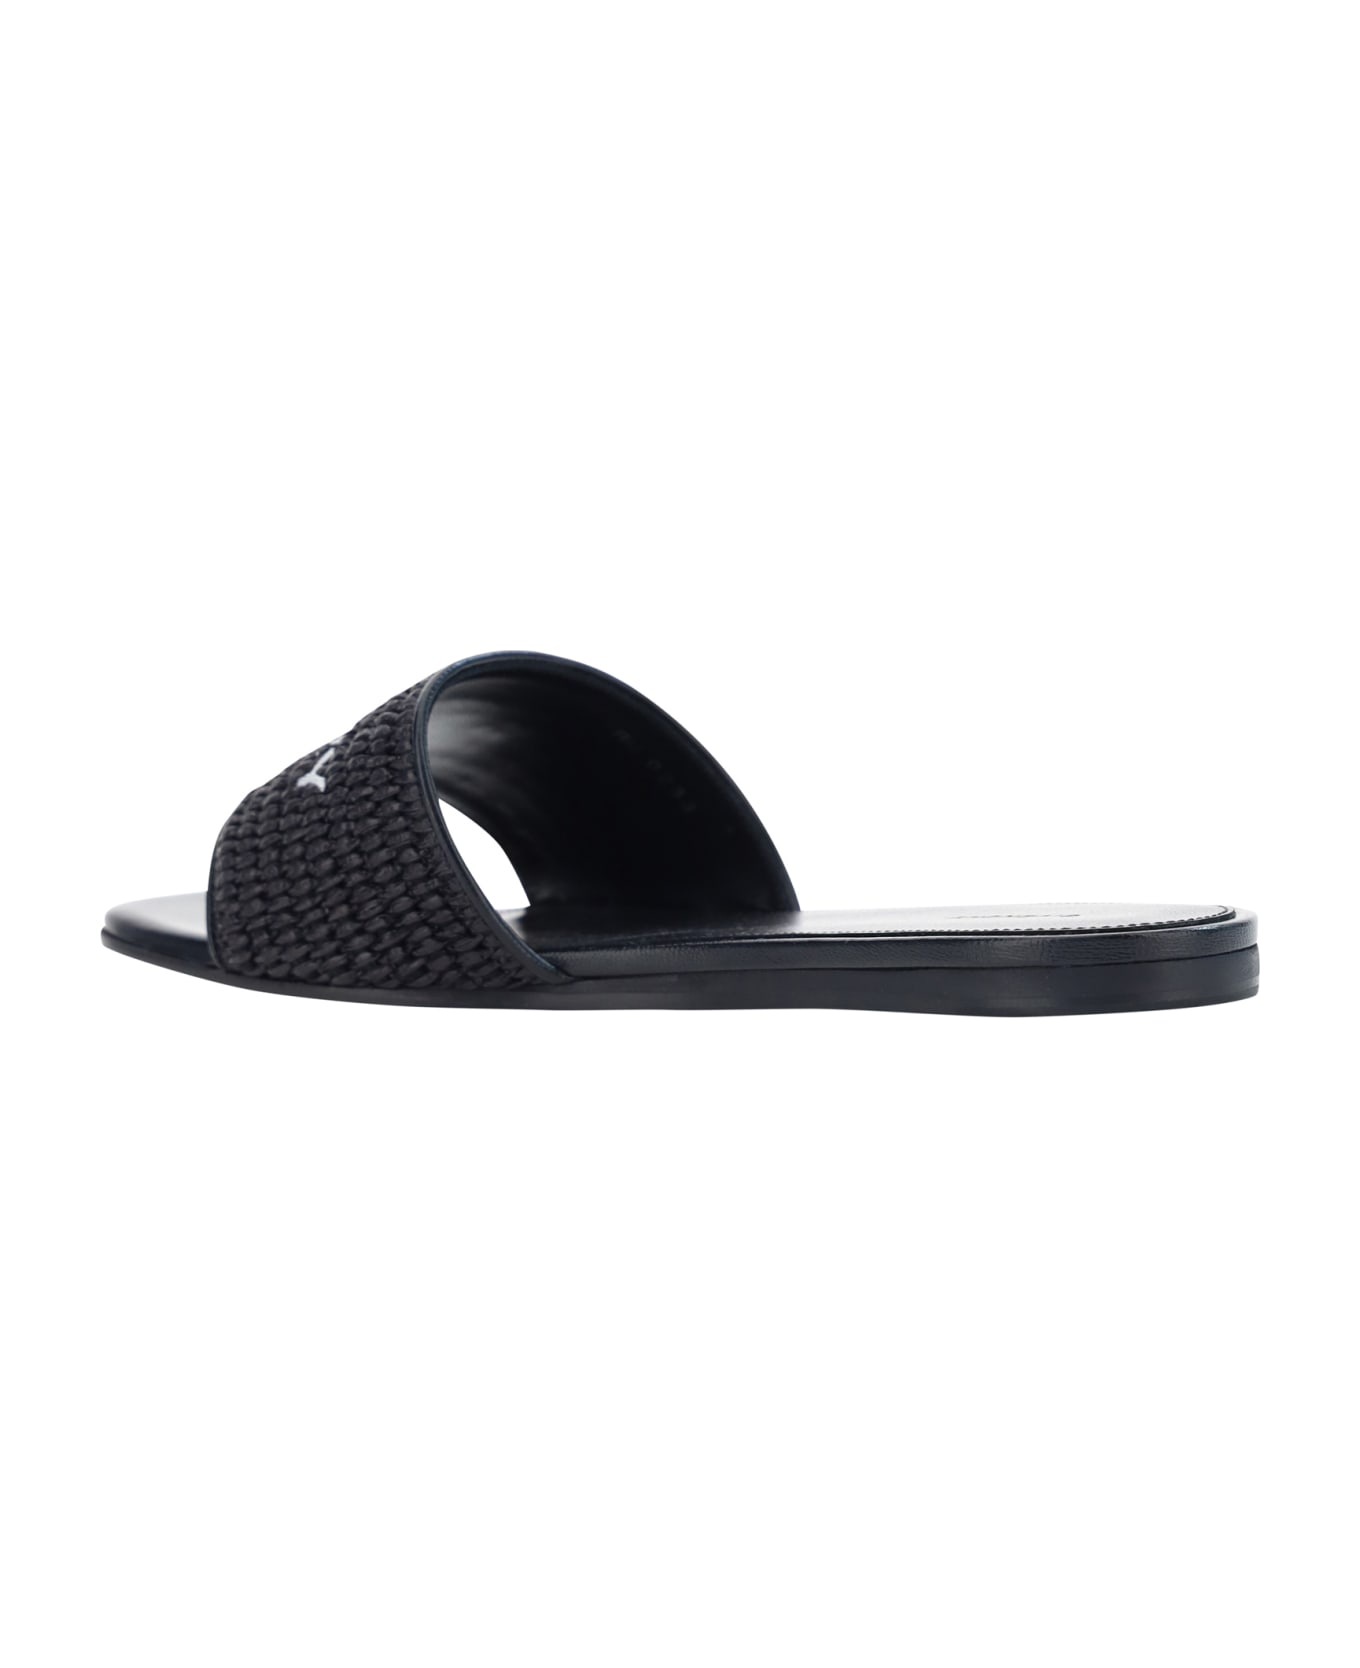 Givenchy 4g Flat Sandals - Black